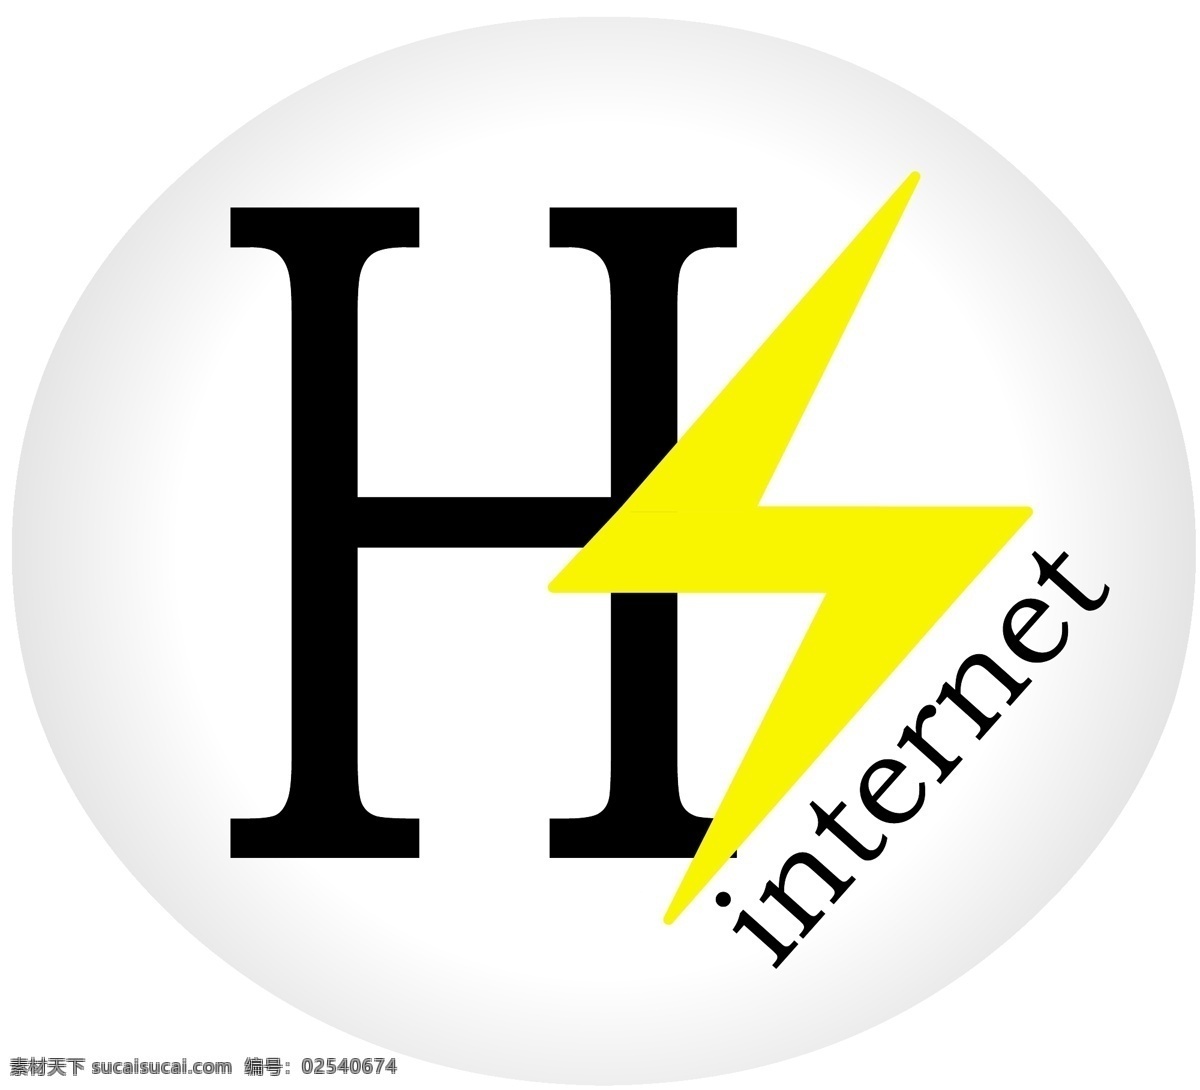 hs 网络 工作室 免费 标识 psd源文件 logo设计